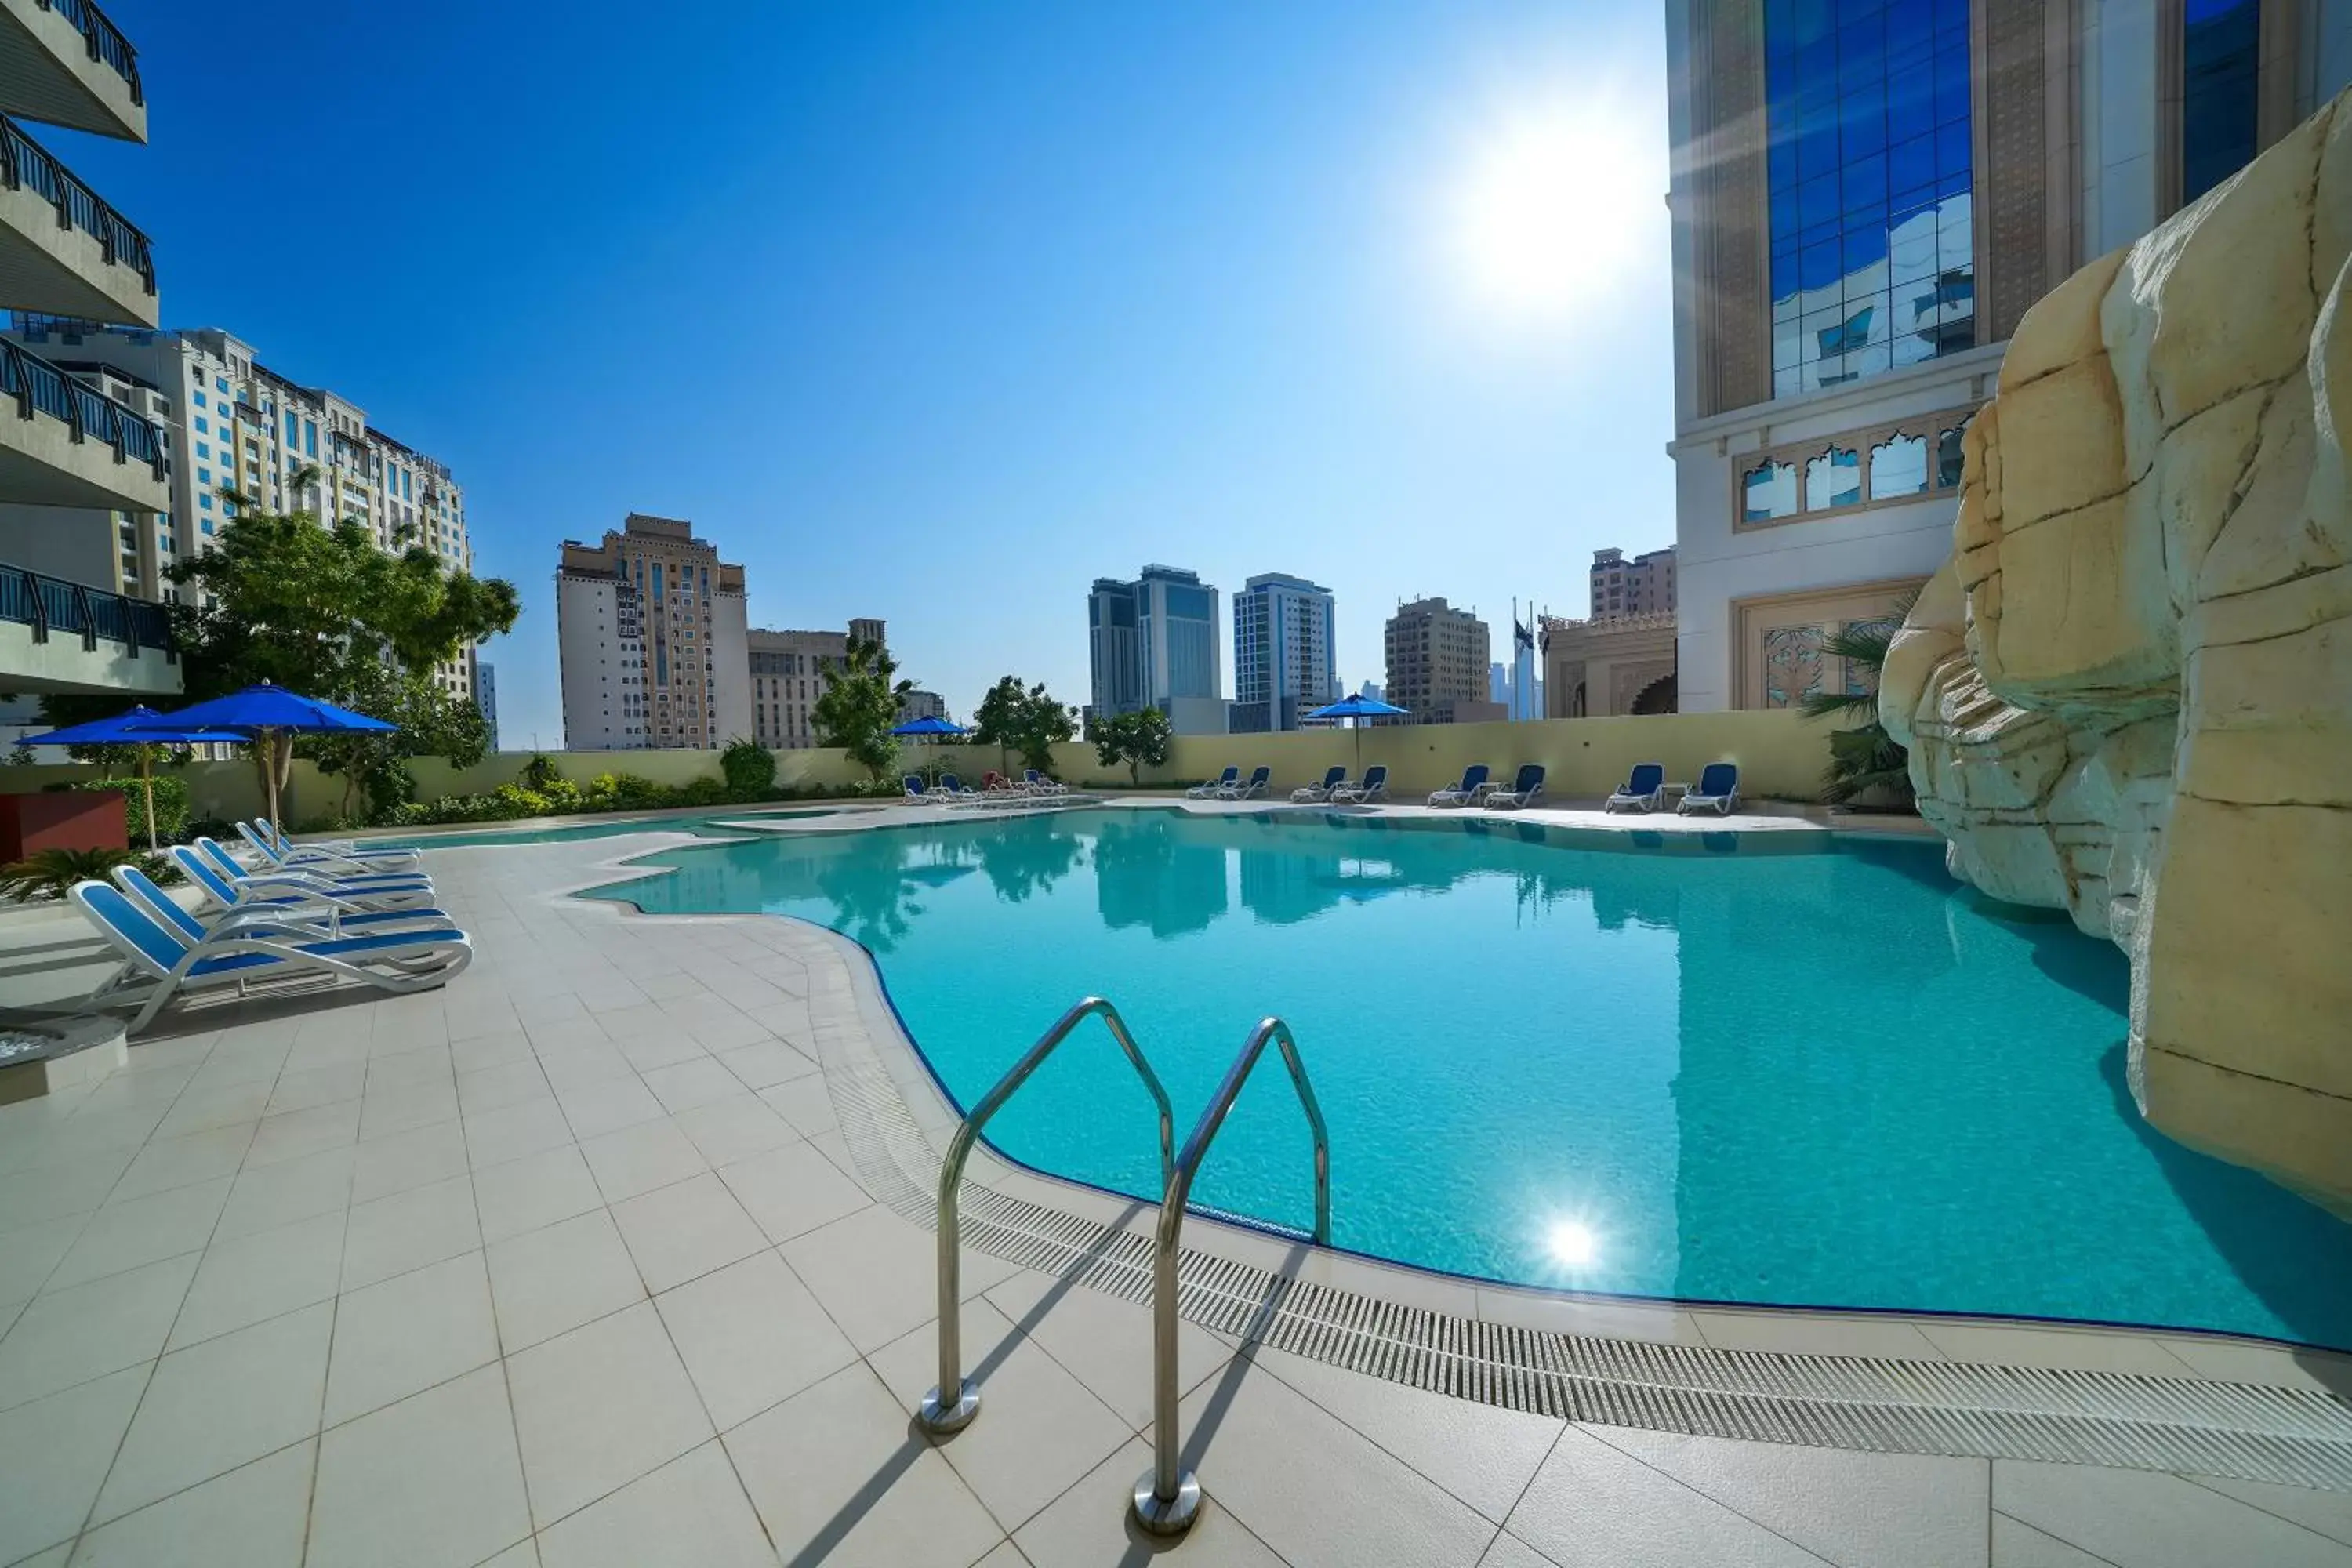 Swimming Pool in Park Apartments Dubai, an Edge By Rotana Hotel